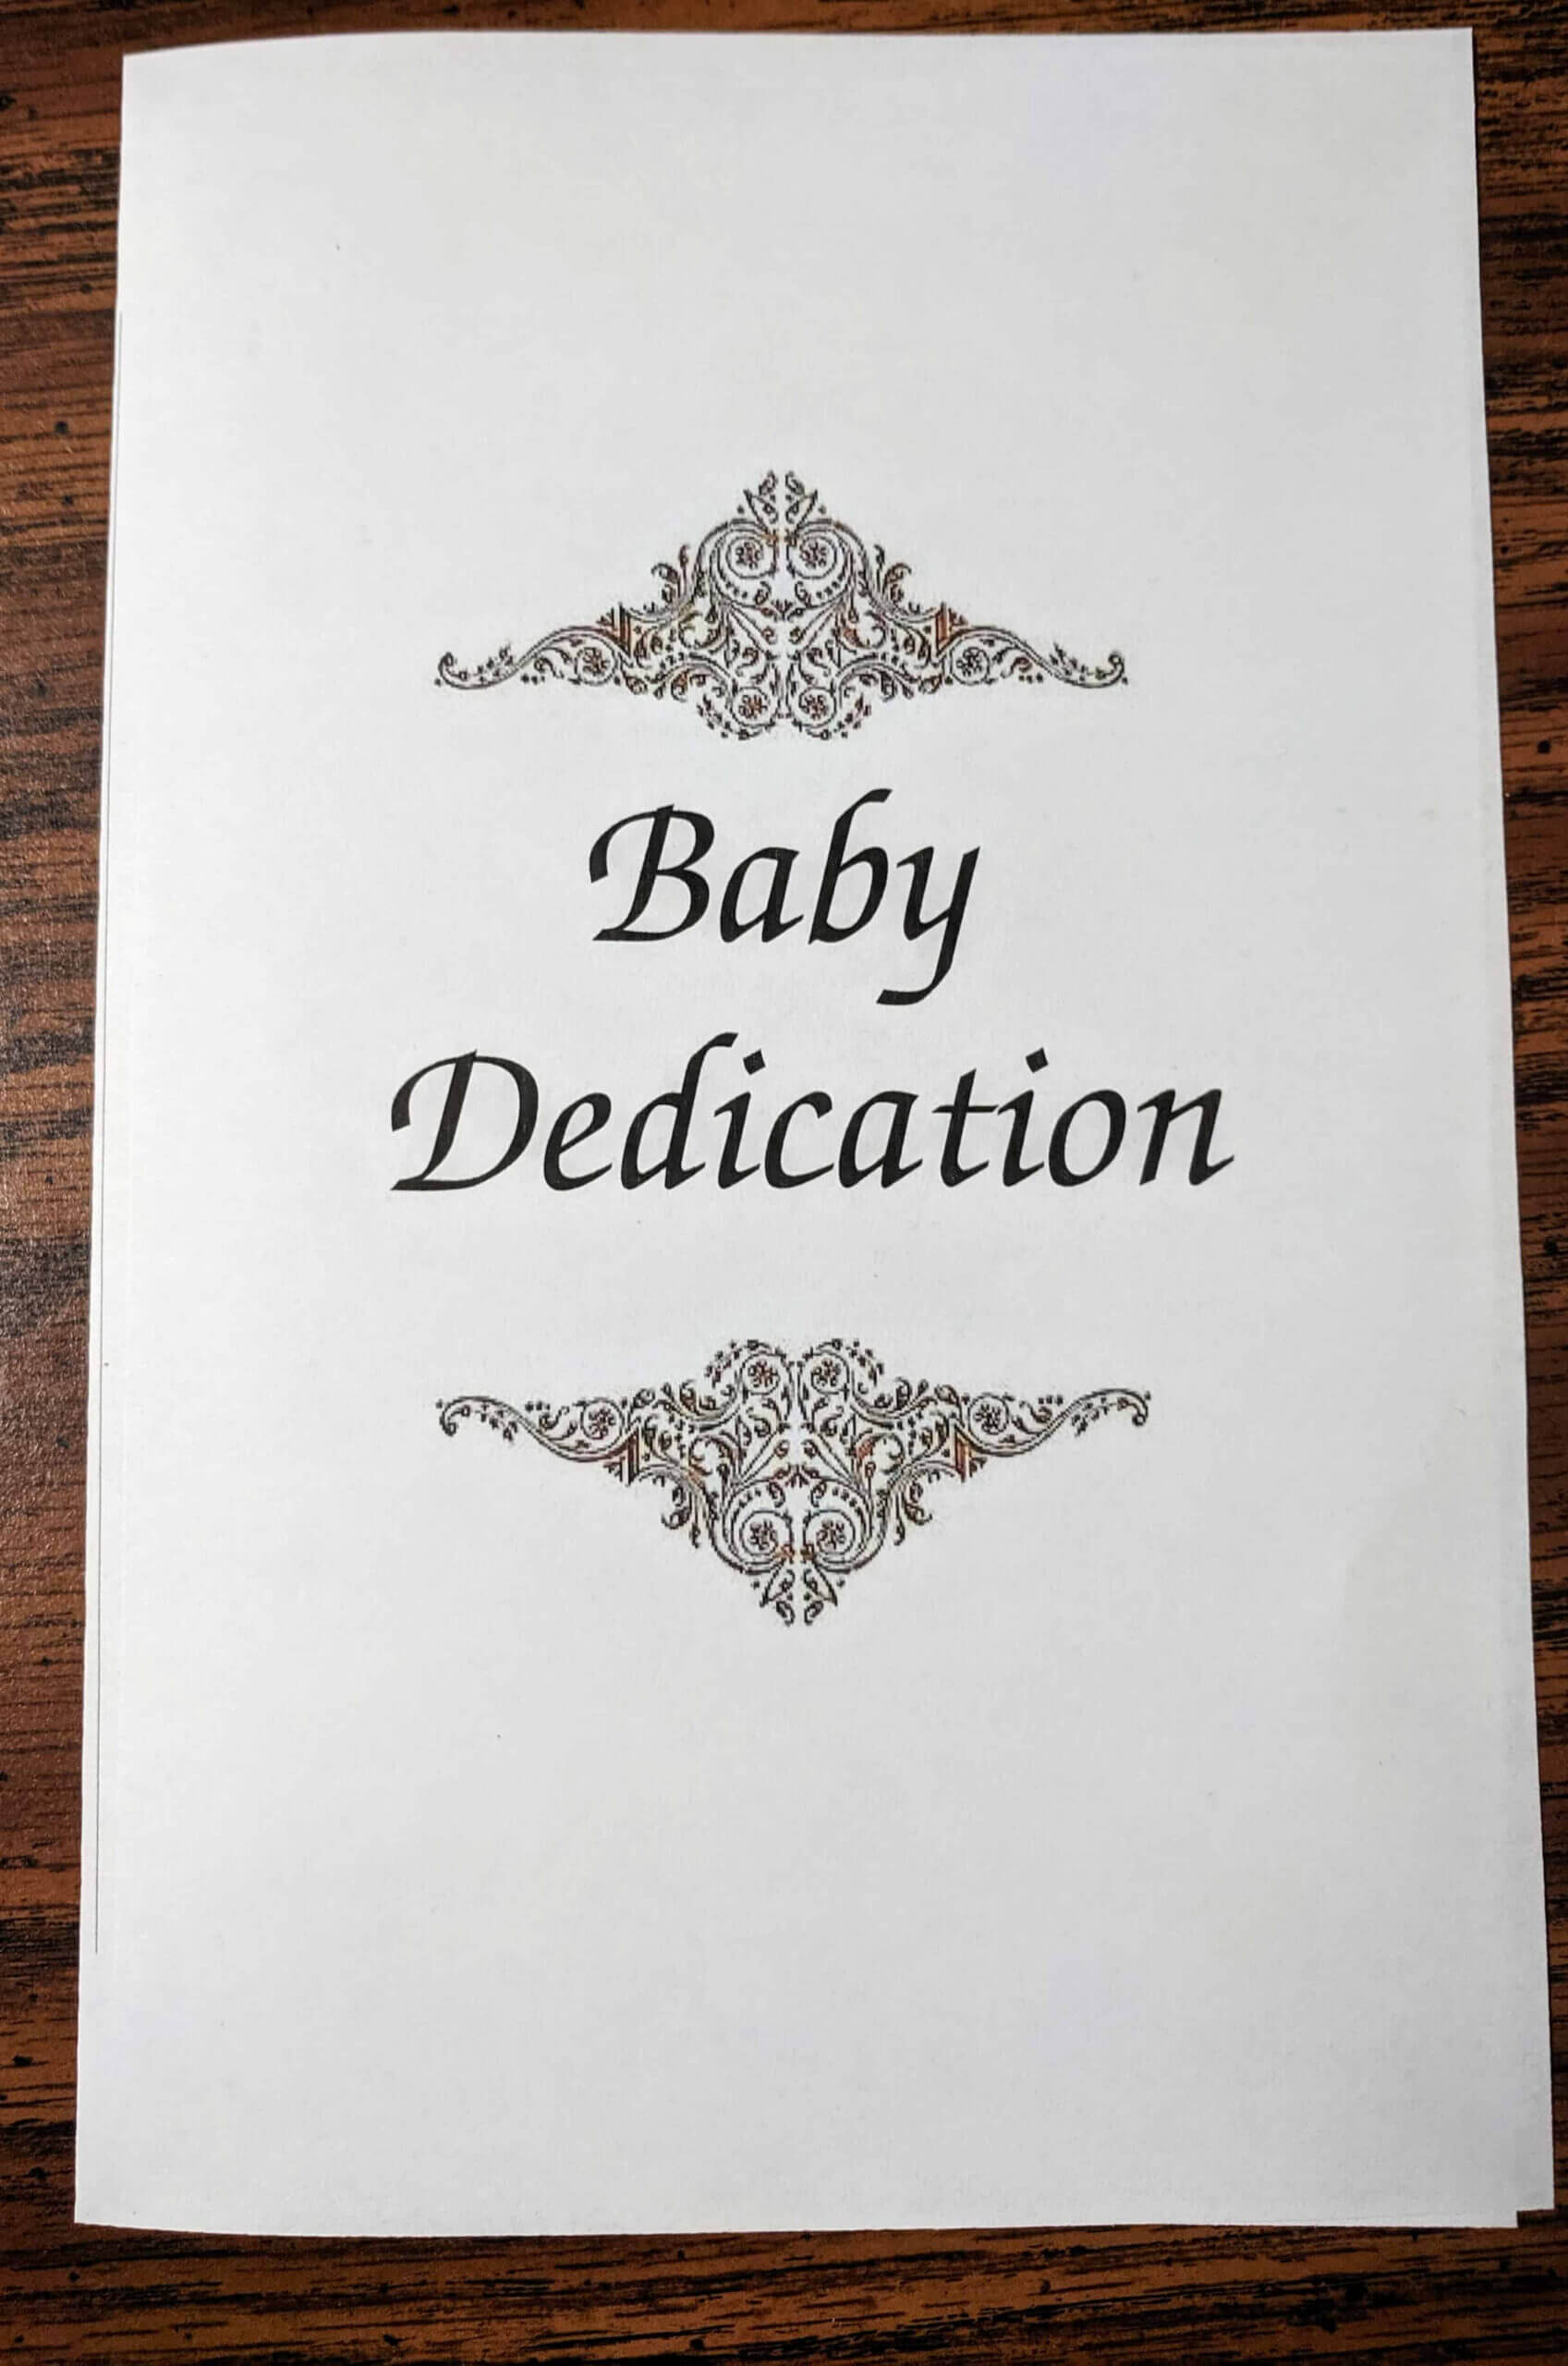 Baby Dedication" Ceremony Includes Prayer, Message, Certificate In Baby Dedication Certificate Template